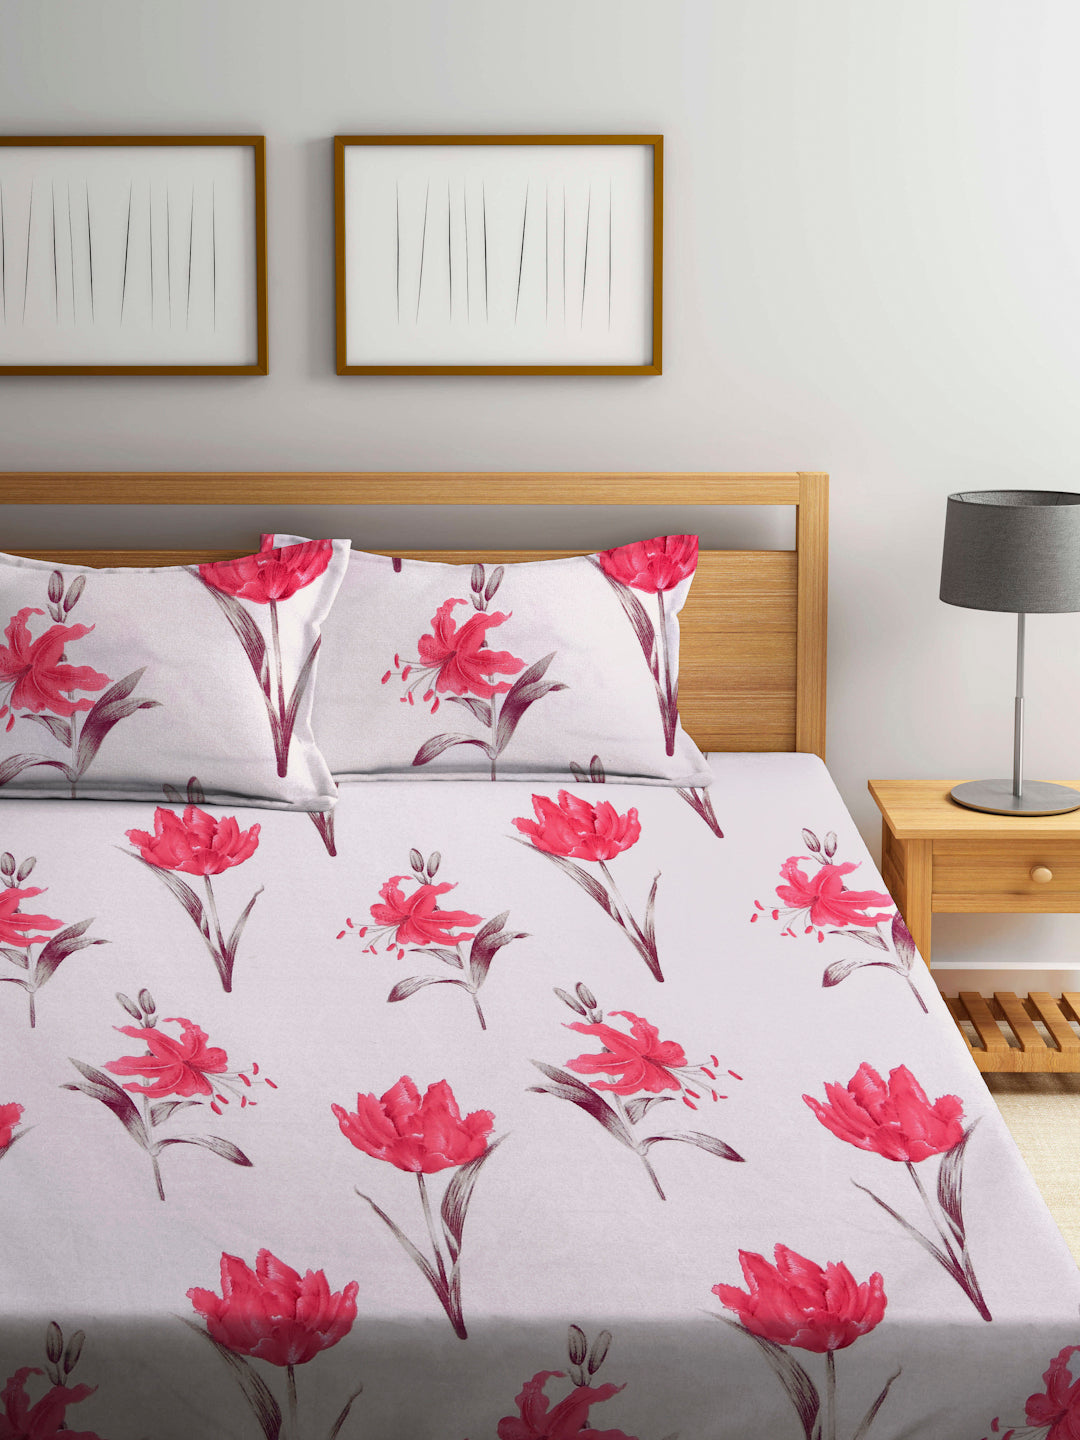 Arrabi Beige Floral TC Cotton Blend Super King Size Bookfold Bedsheet with 2 Pillow Covers (270 X 260 cm)